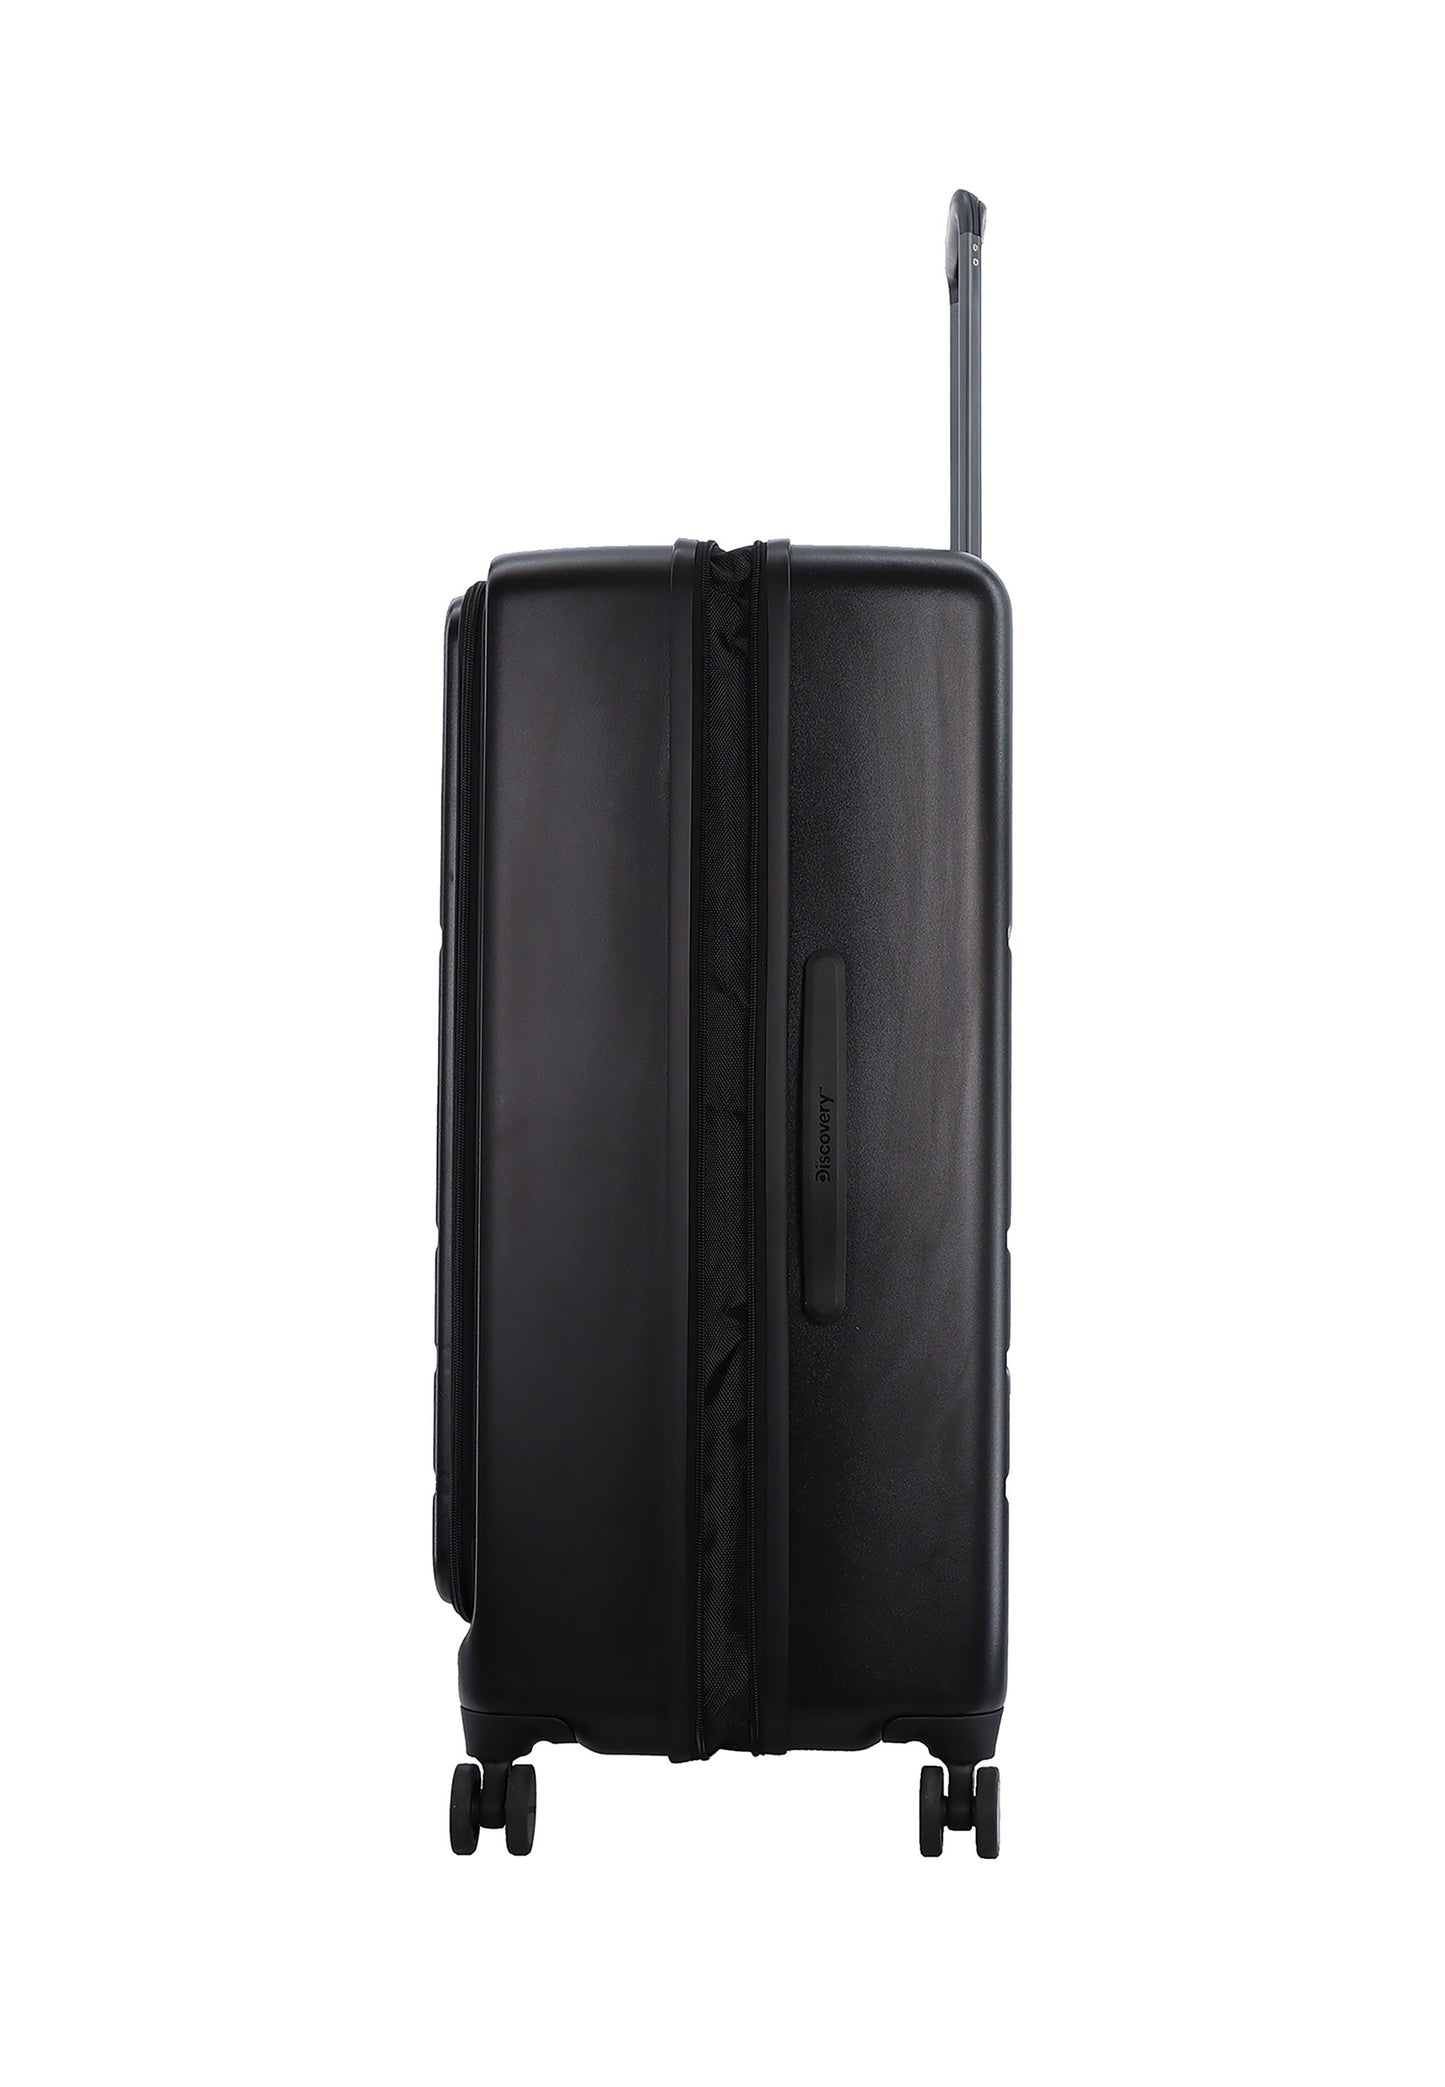 Valise rigide / trolley / valise de voyage Discovery - 78 cm (grande) - Patrol - Anthracite